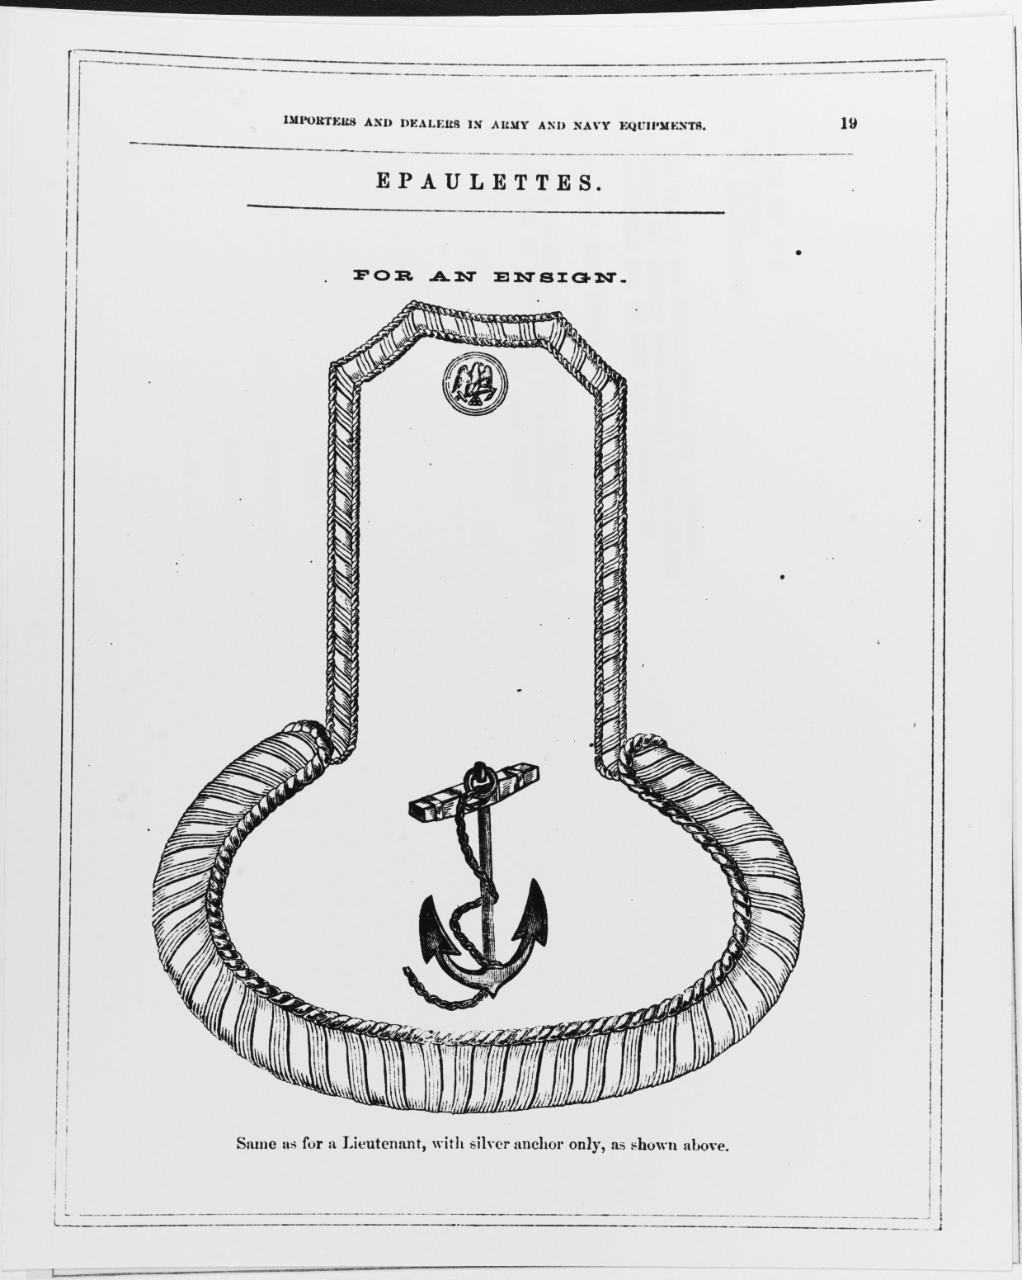 Uniform Regulations, 1862. Epaulets for an Ensign